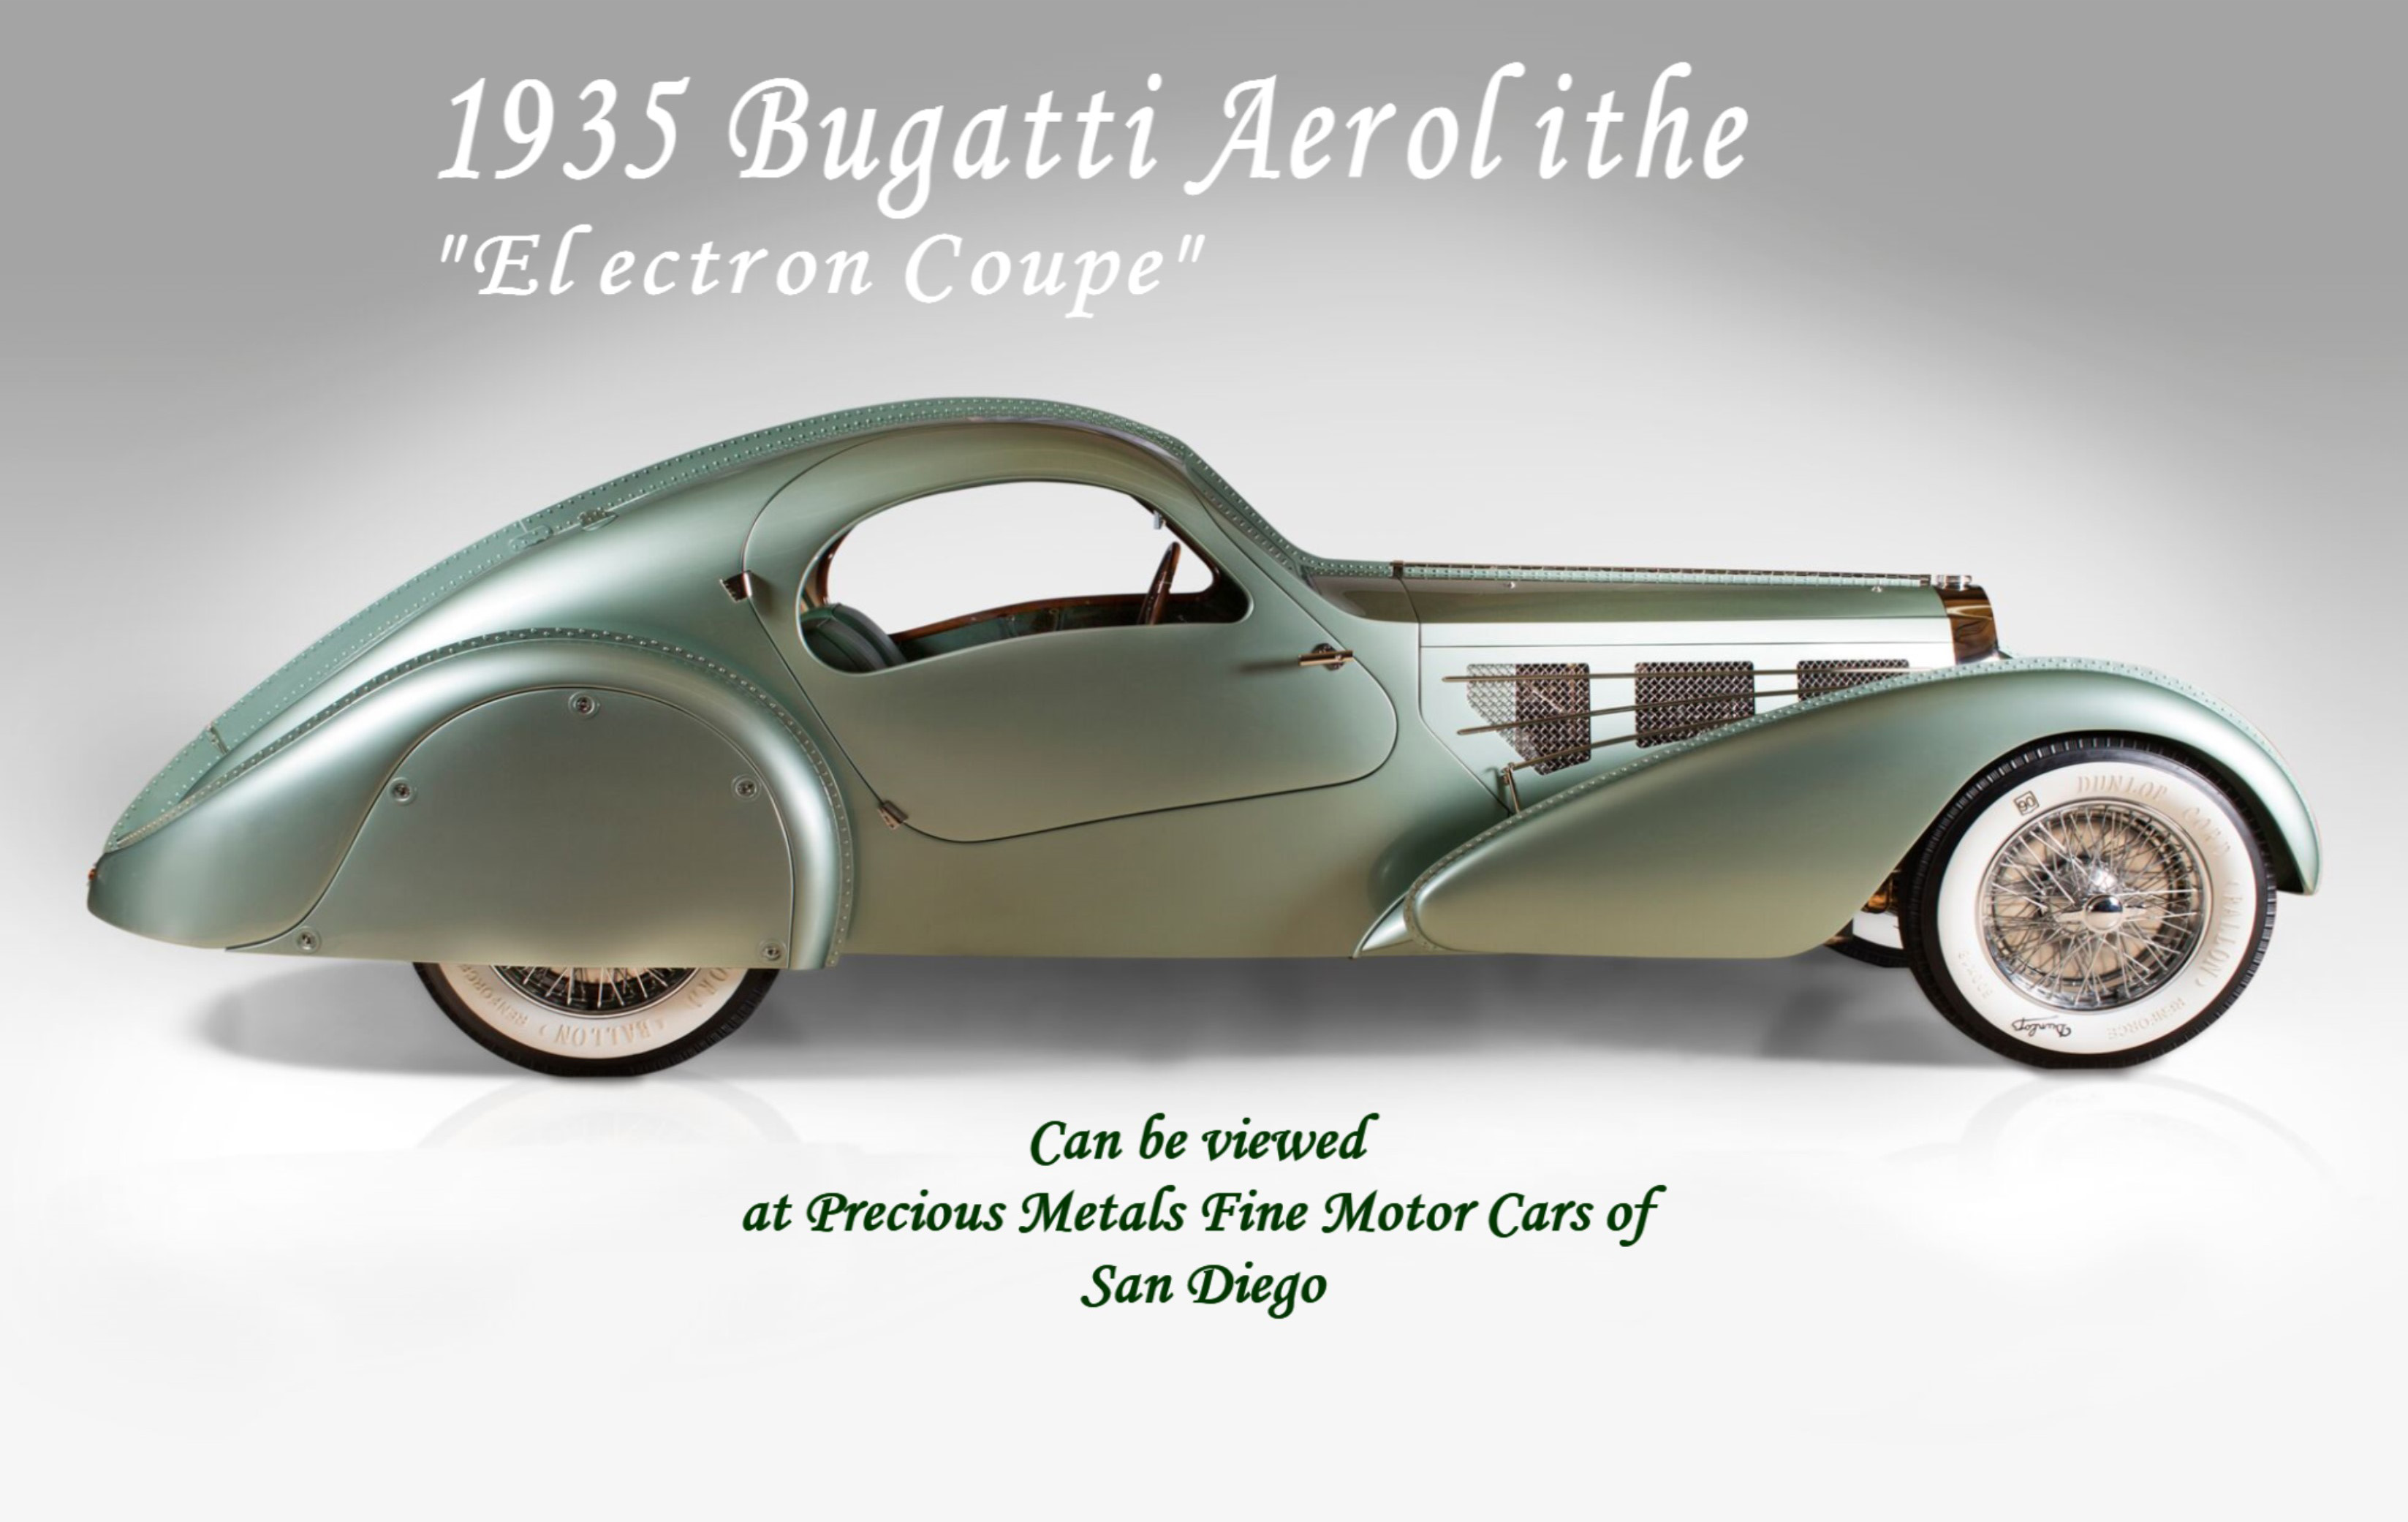 1935 Bugatti Aerolithe Electron Coupe Front View